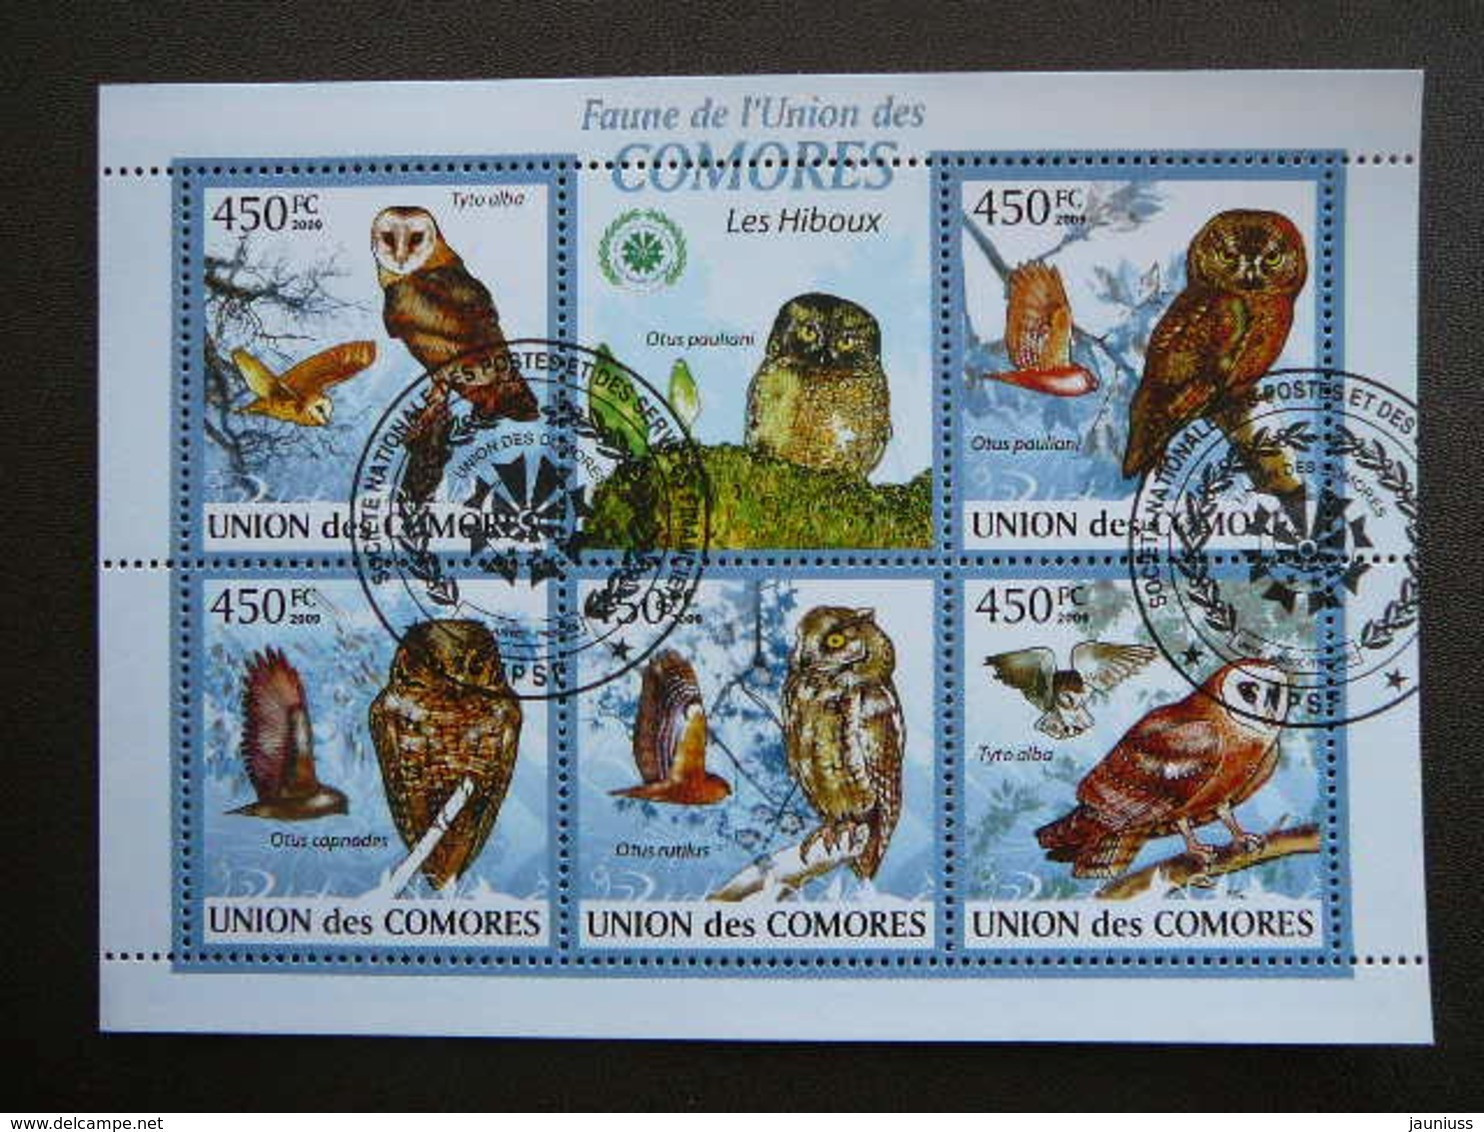 Owls. Eulen. Les Hiboux # Comoros 2009 Used S/s #551 Comores Birds - Hiboux & Chouettes